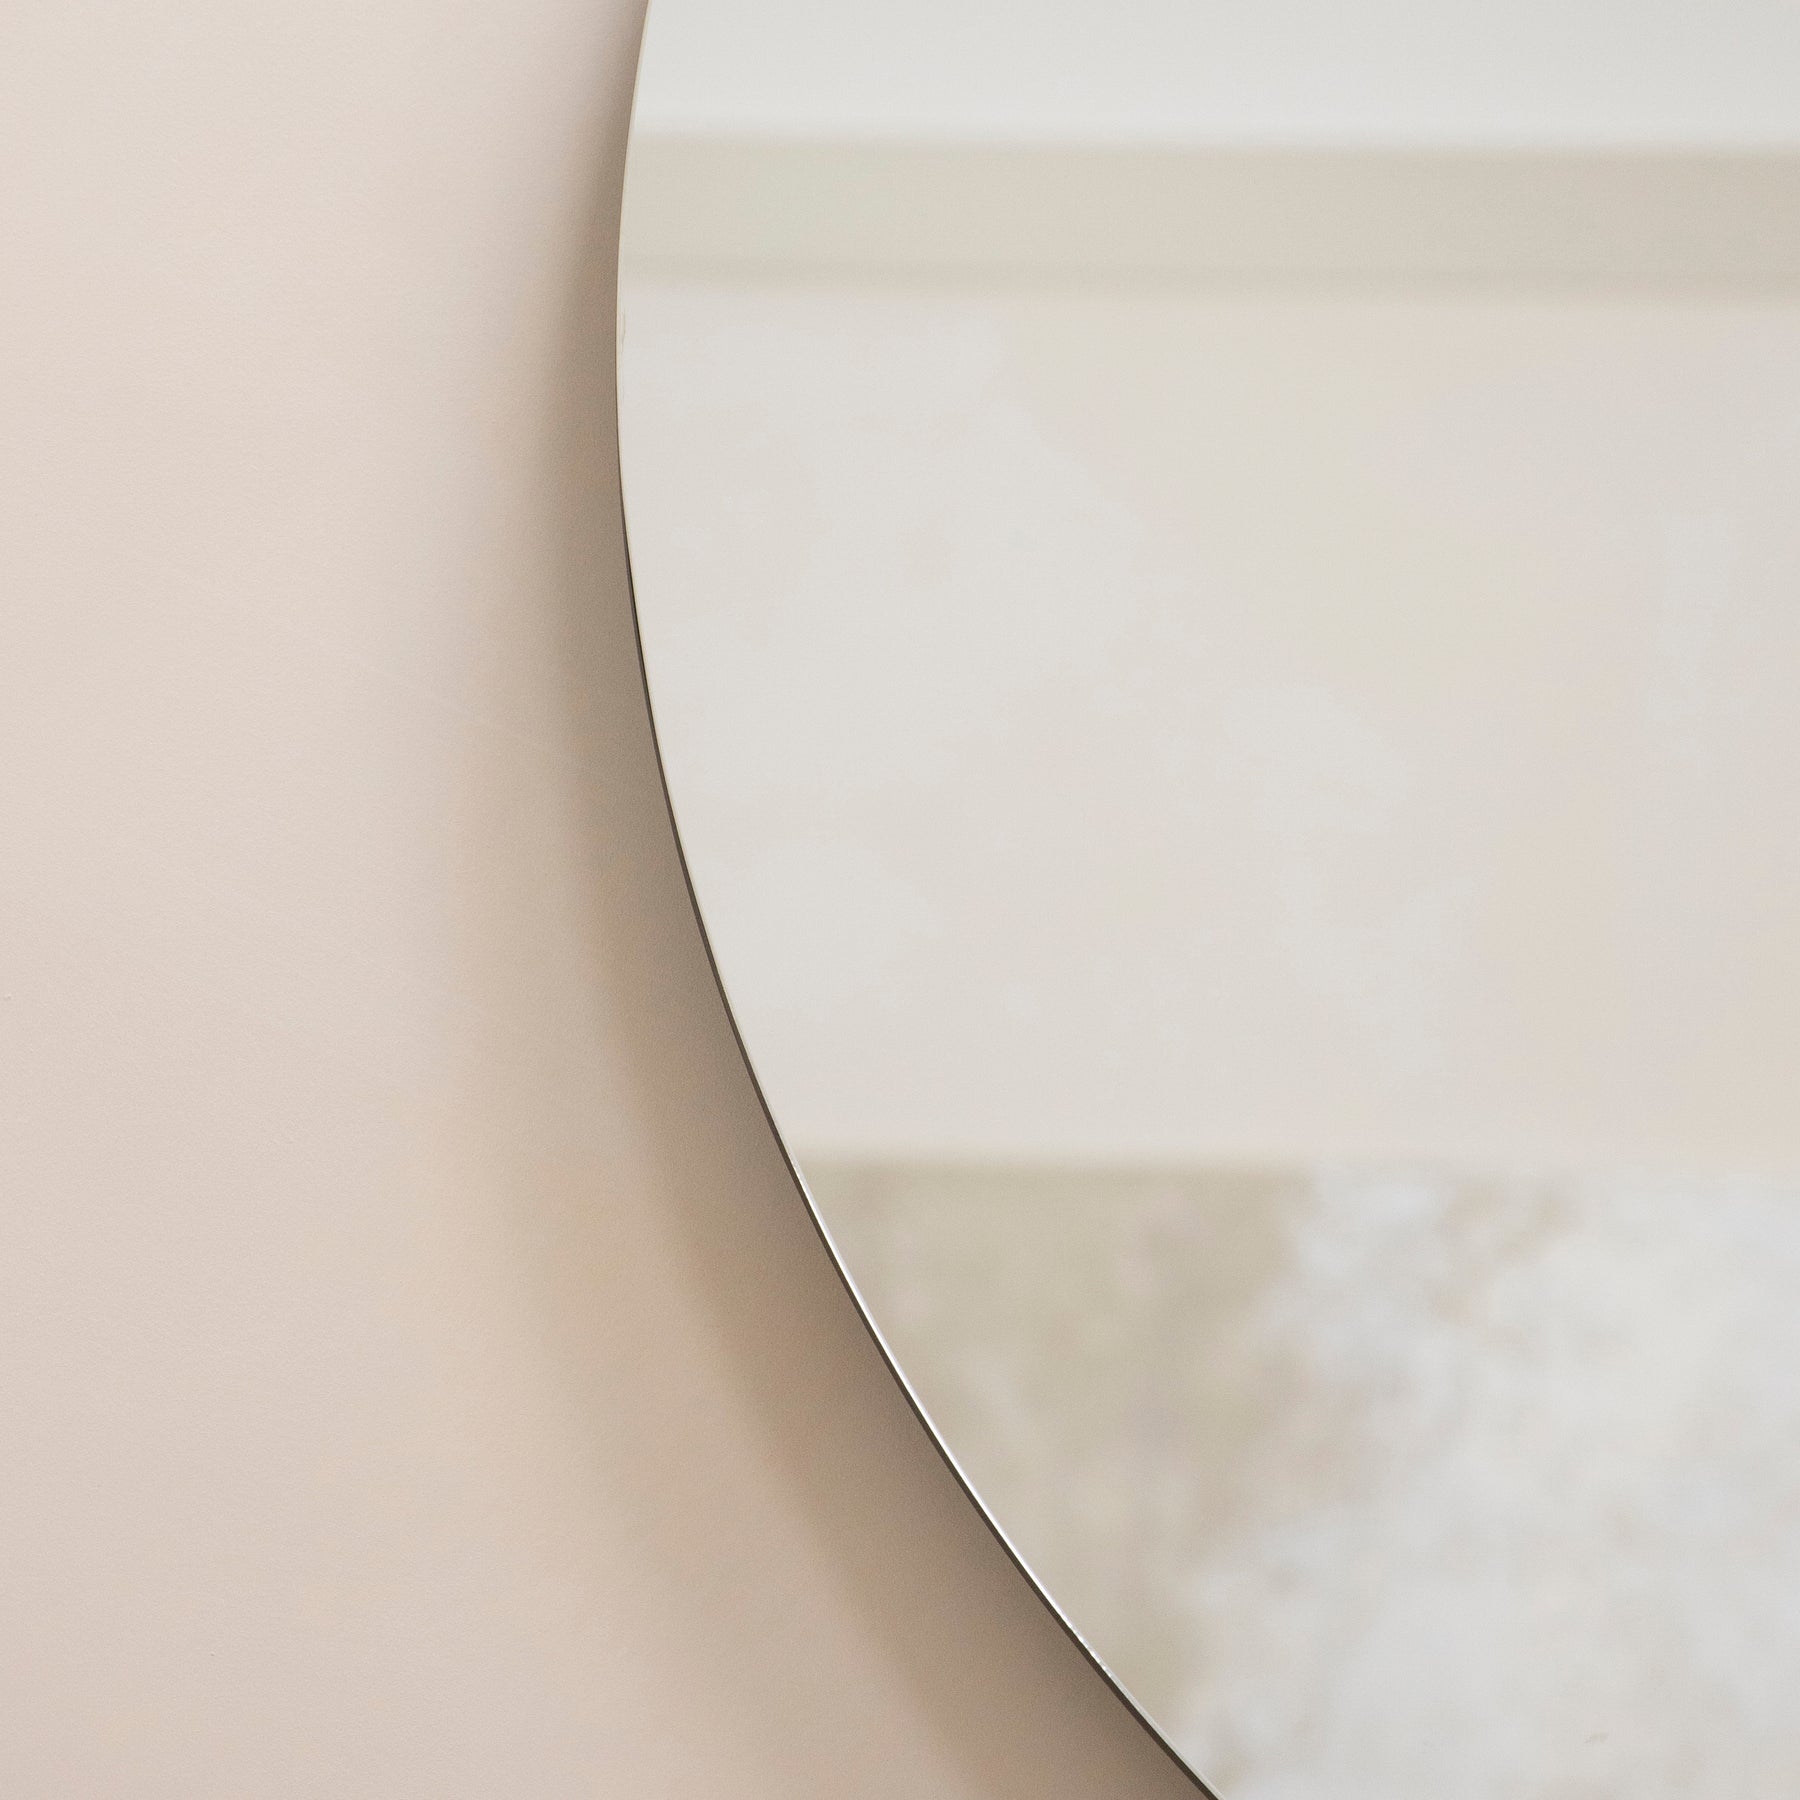 Edge - Large Frameless Round Wall Mirror 100cm x 100cm